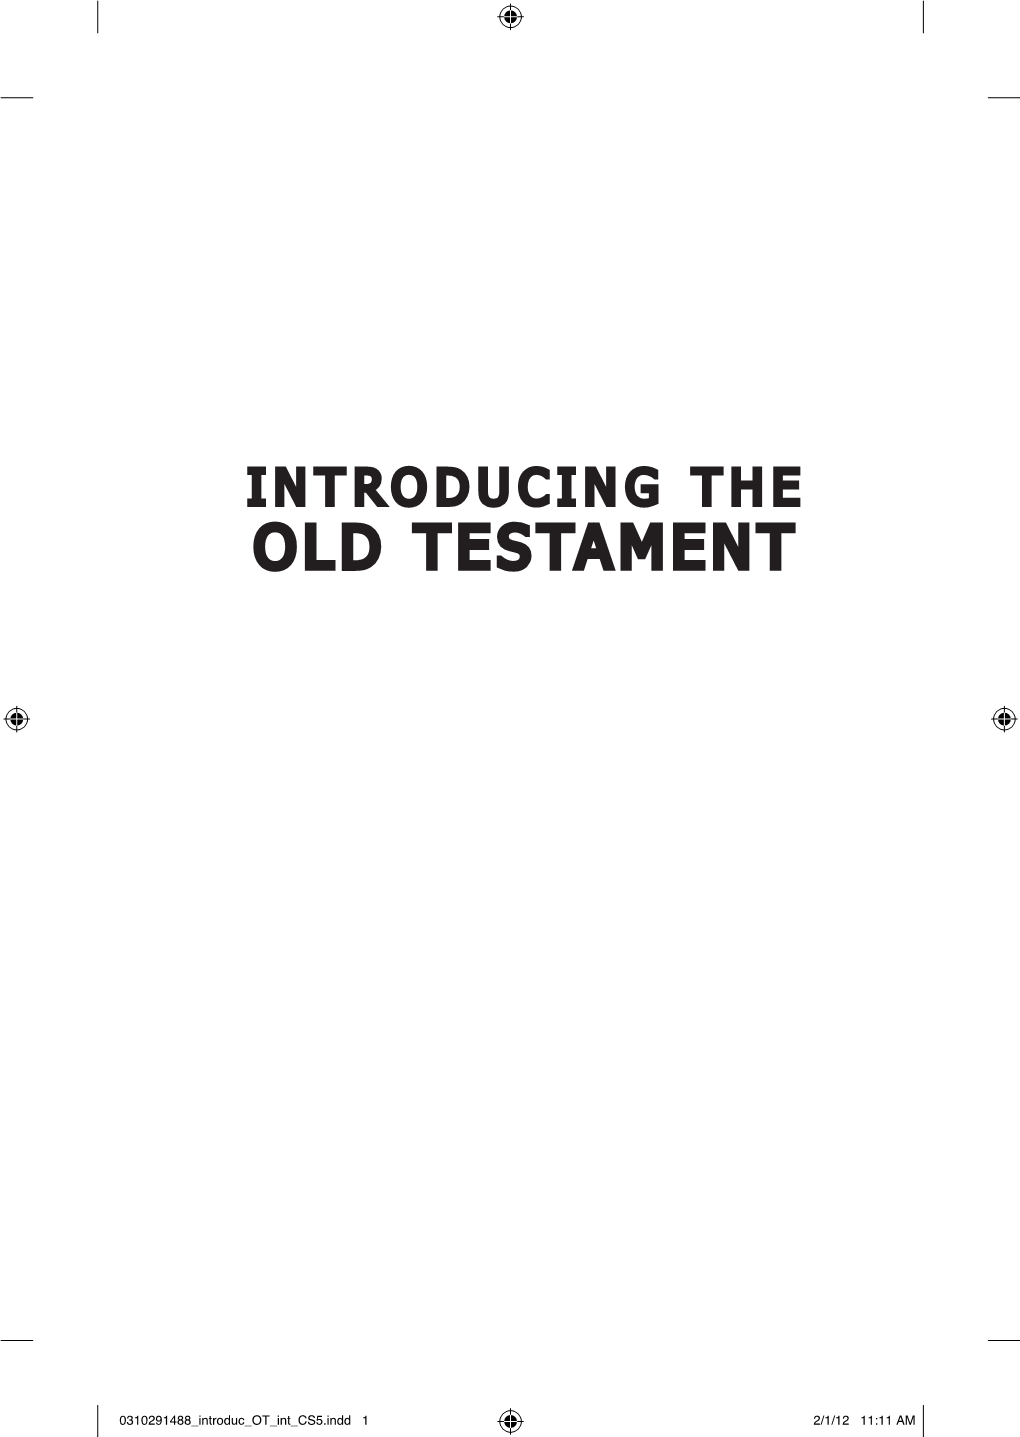 OLD Testament